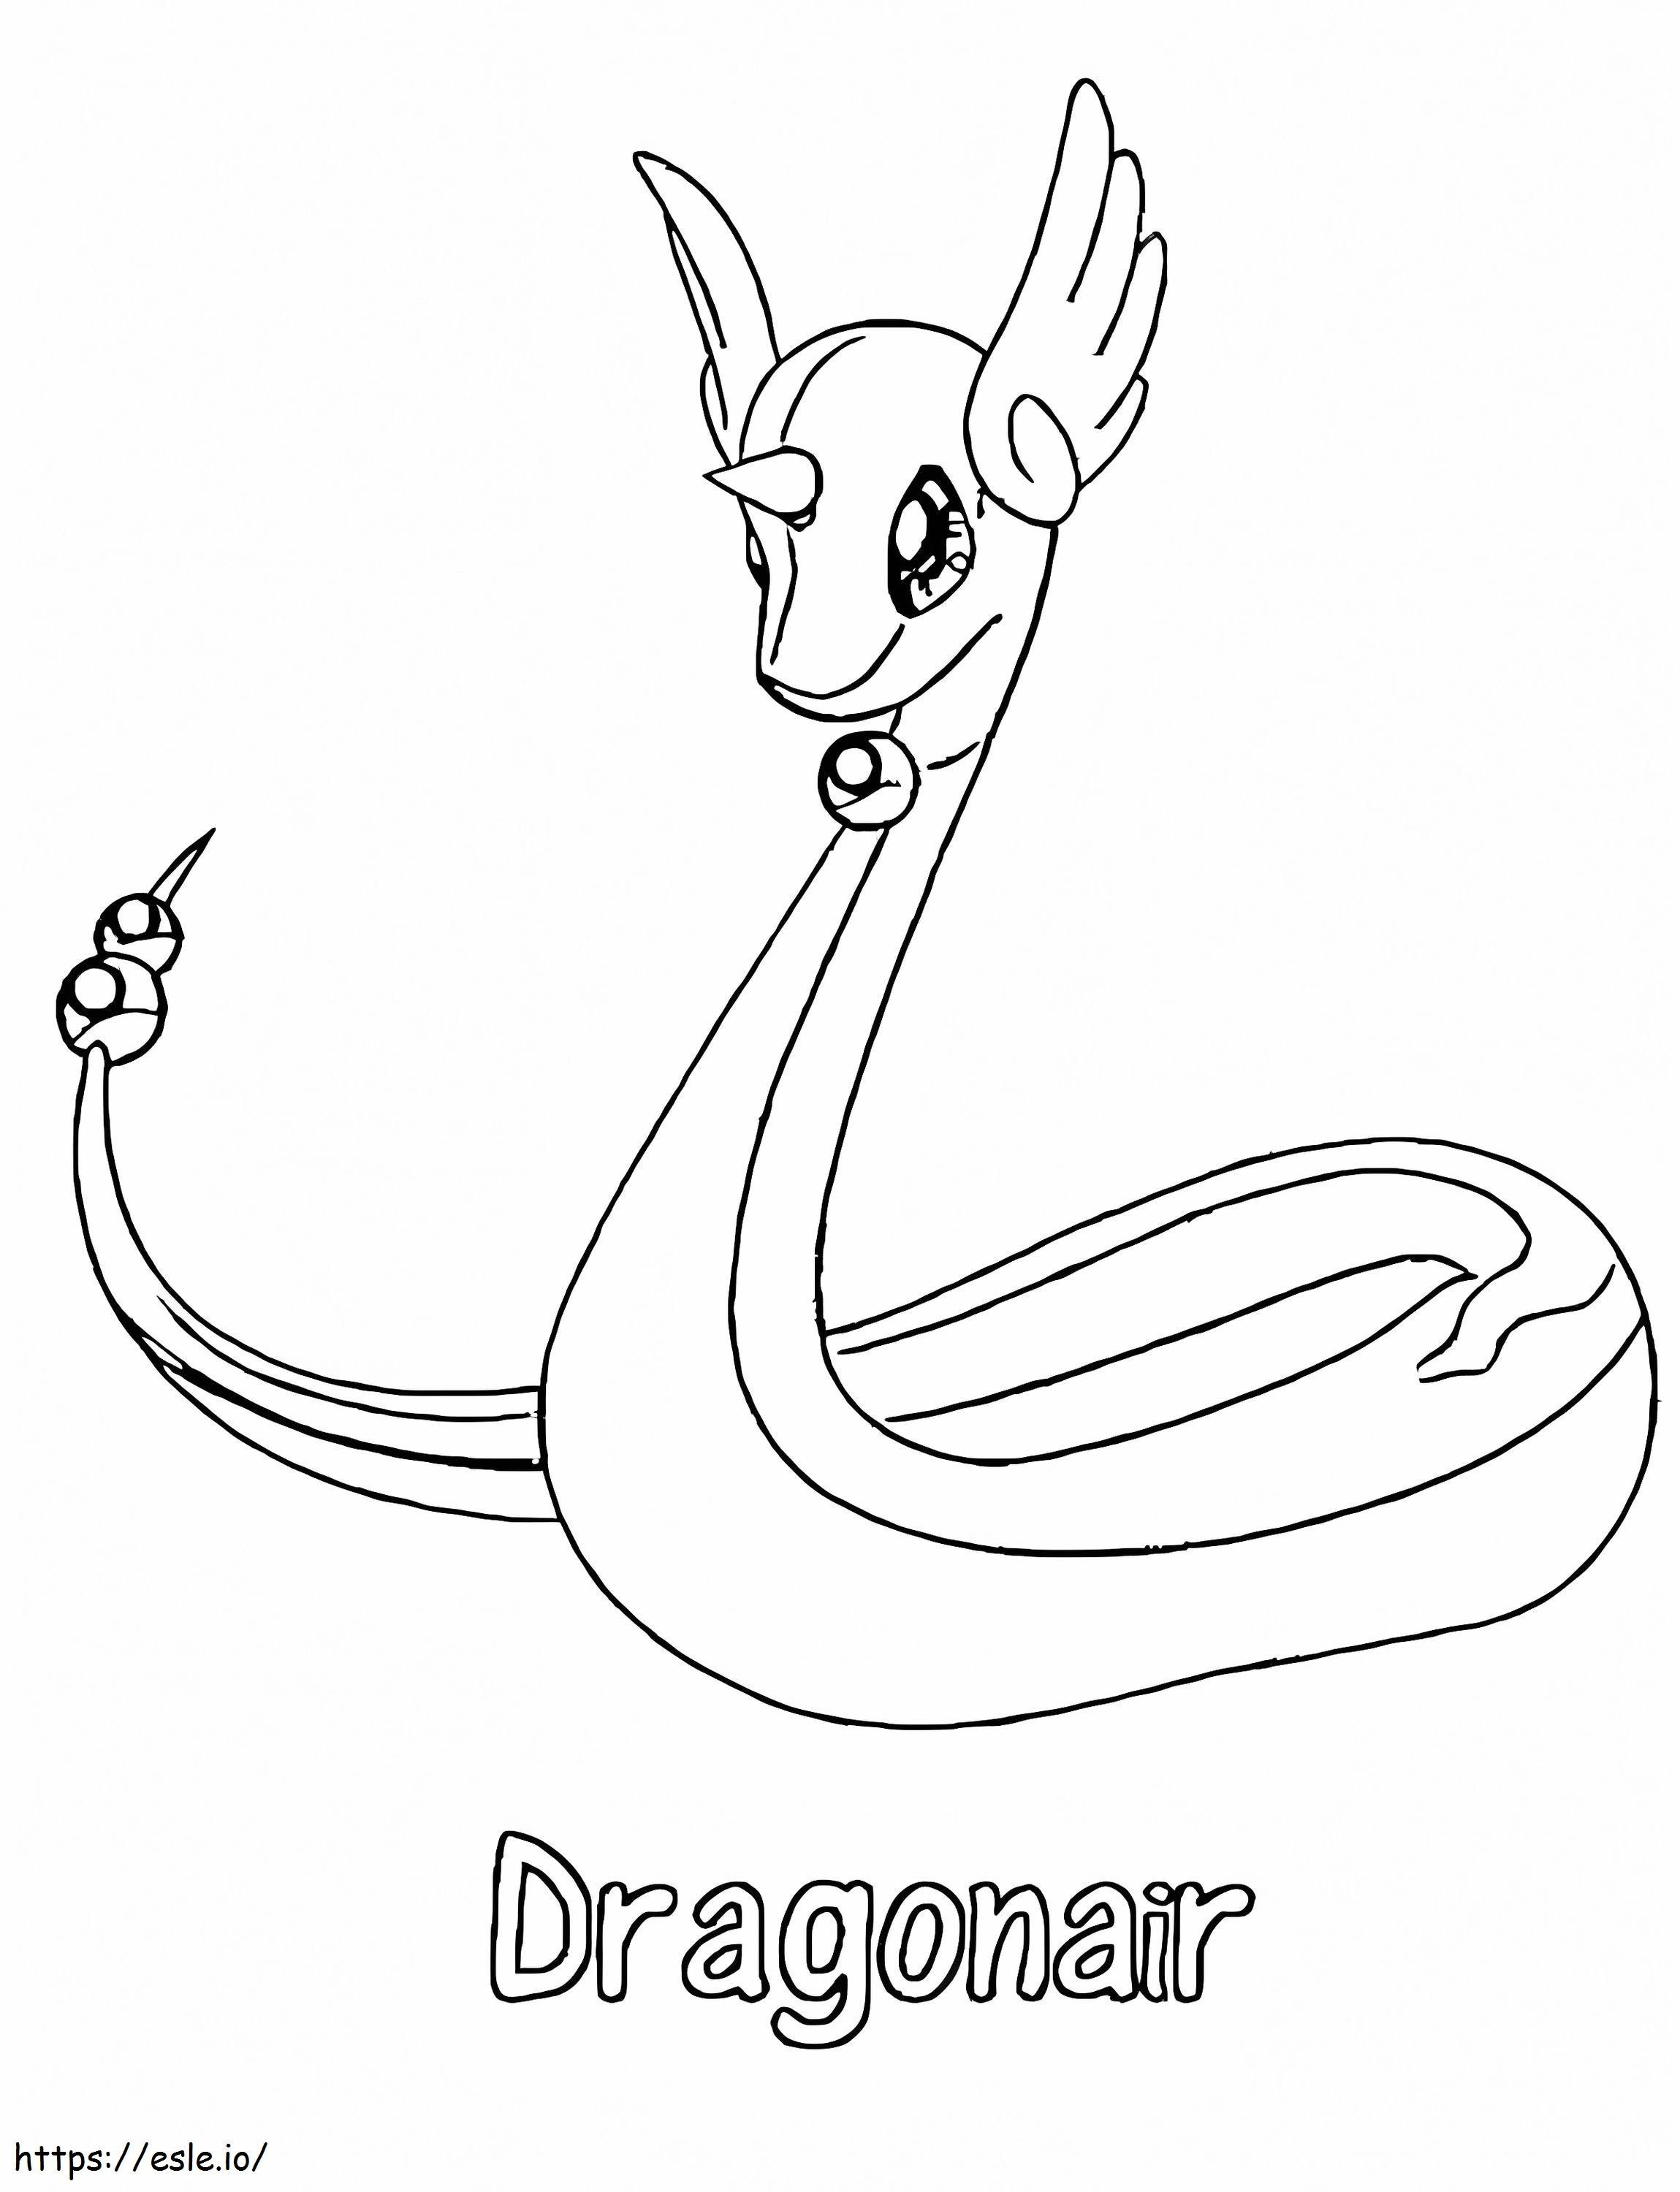 Dragonair-Pokémon ausmalbilder